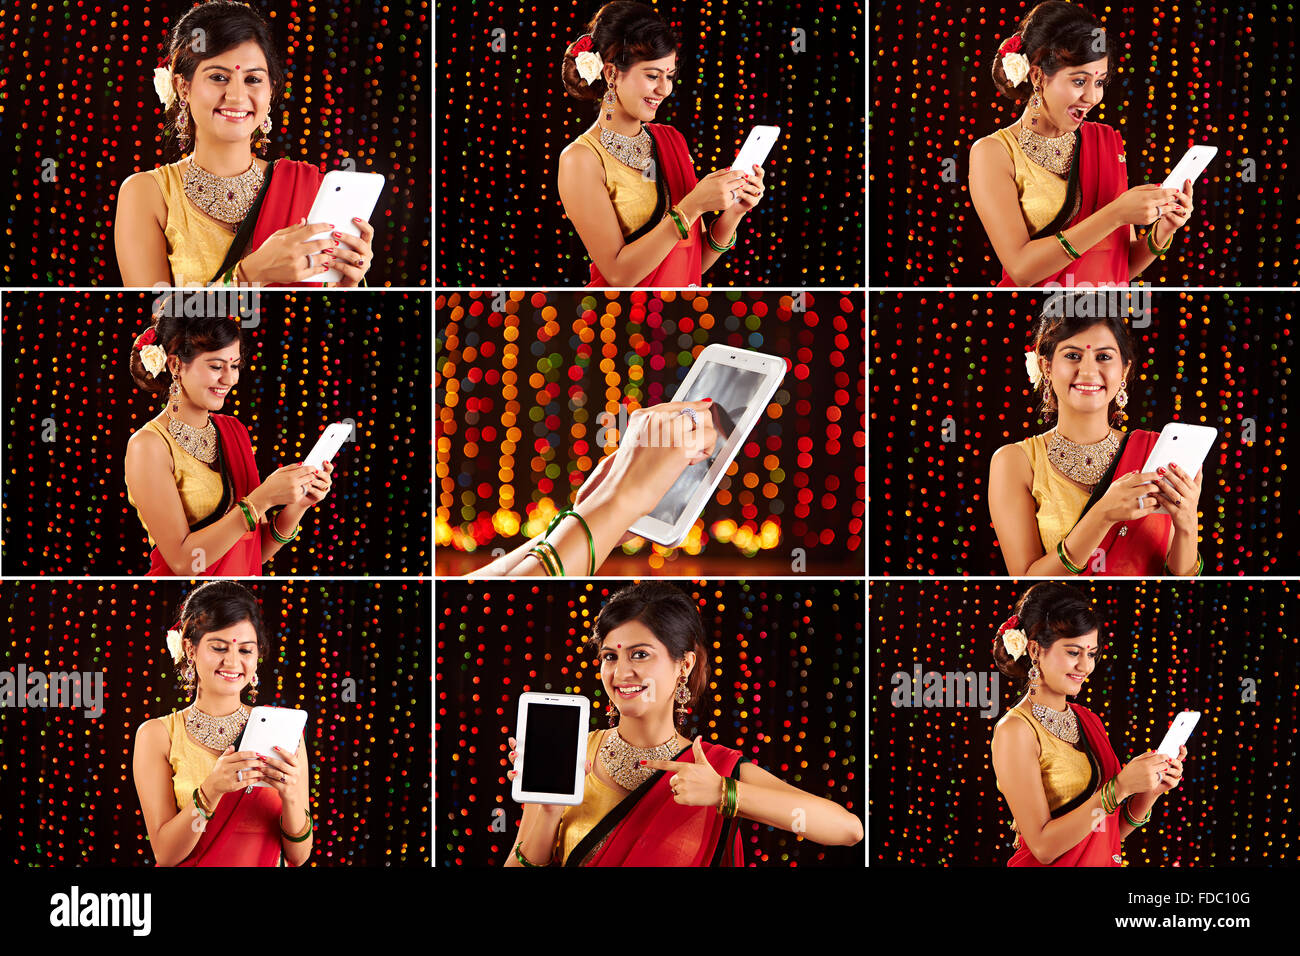 1 donna indiana casalinga diwali cebebration tablet pc communication espressione facciale FOTO MONTAGE Foto Stock